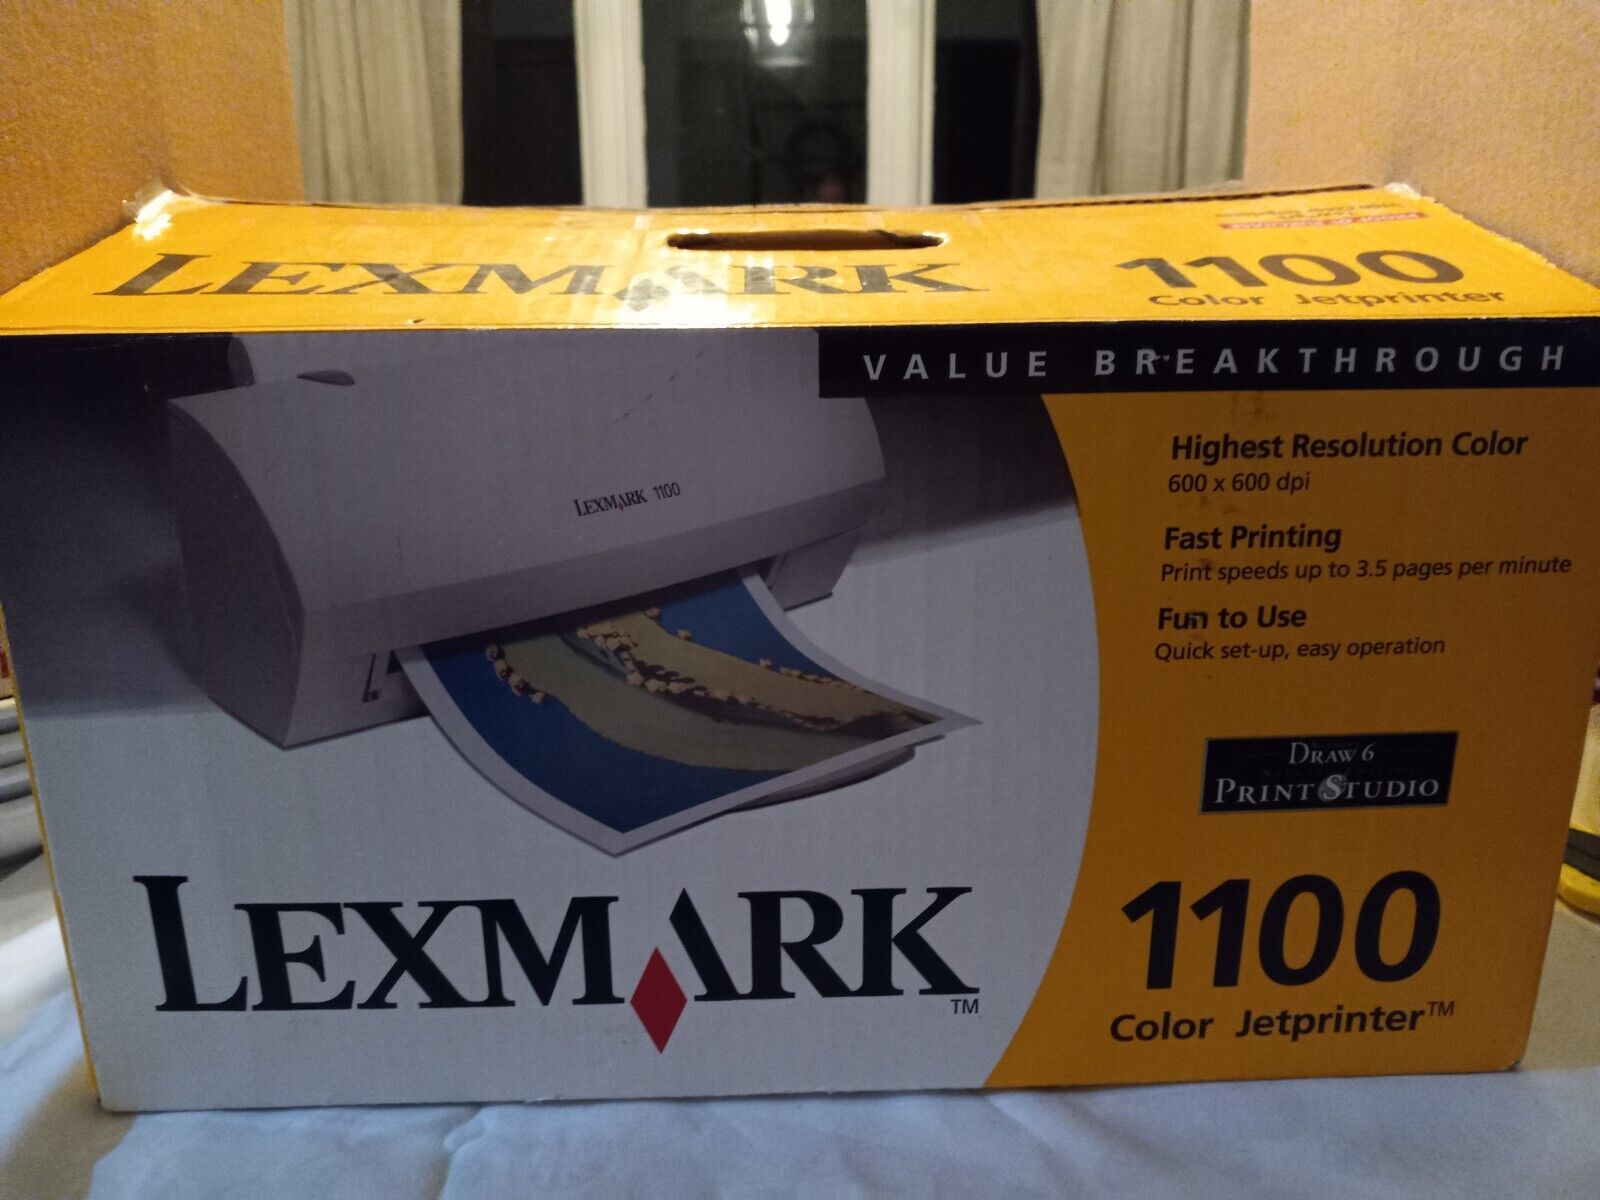 LEXMARK 1100 Color Jetprinter NEW 